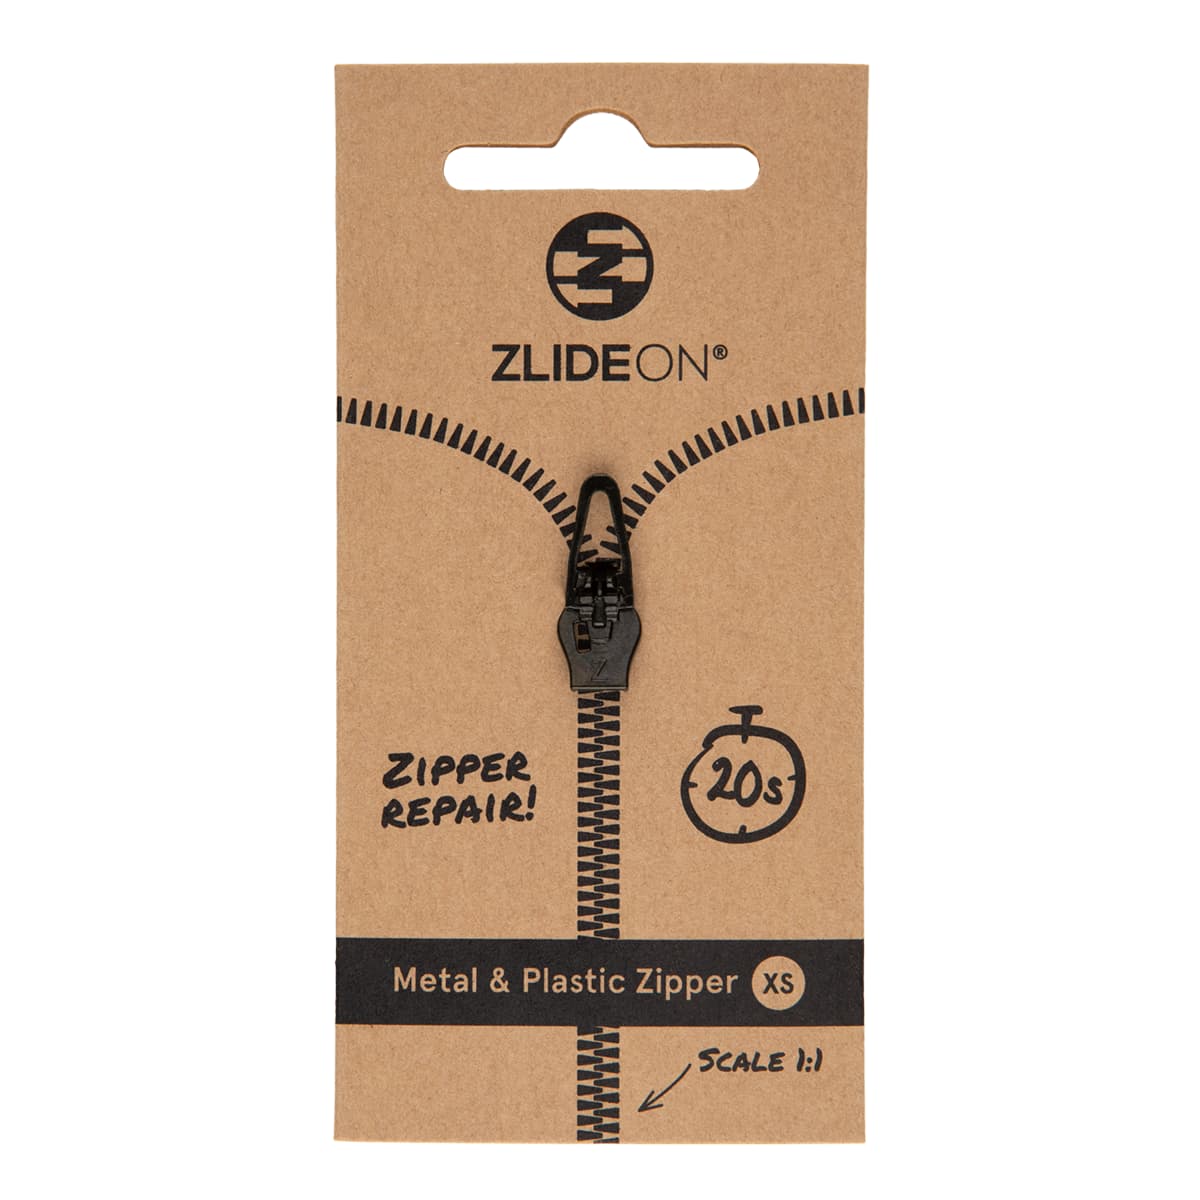 ZlideOn Replacement Zipper Multipacks